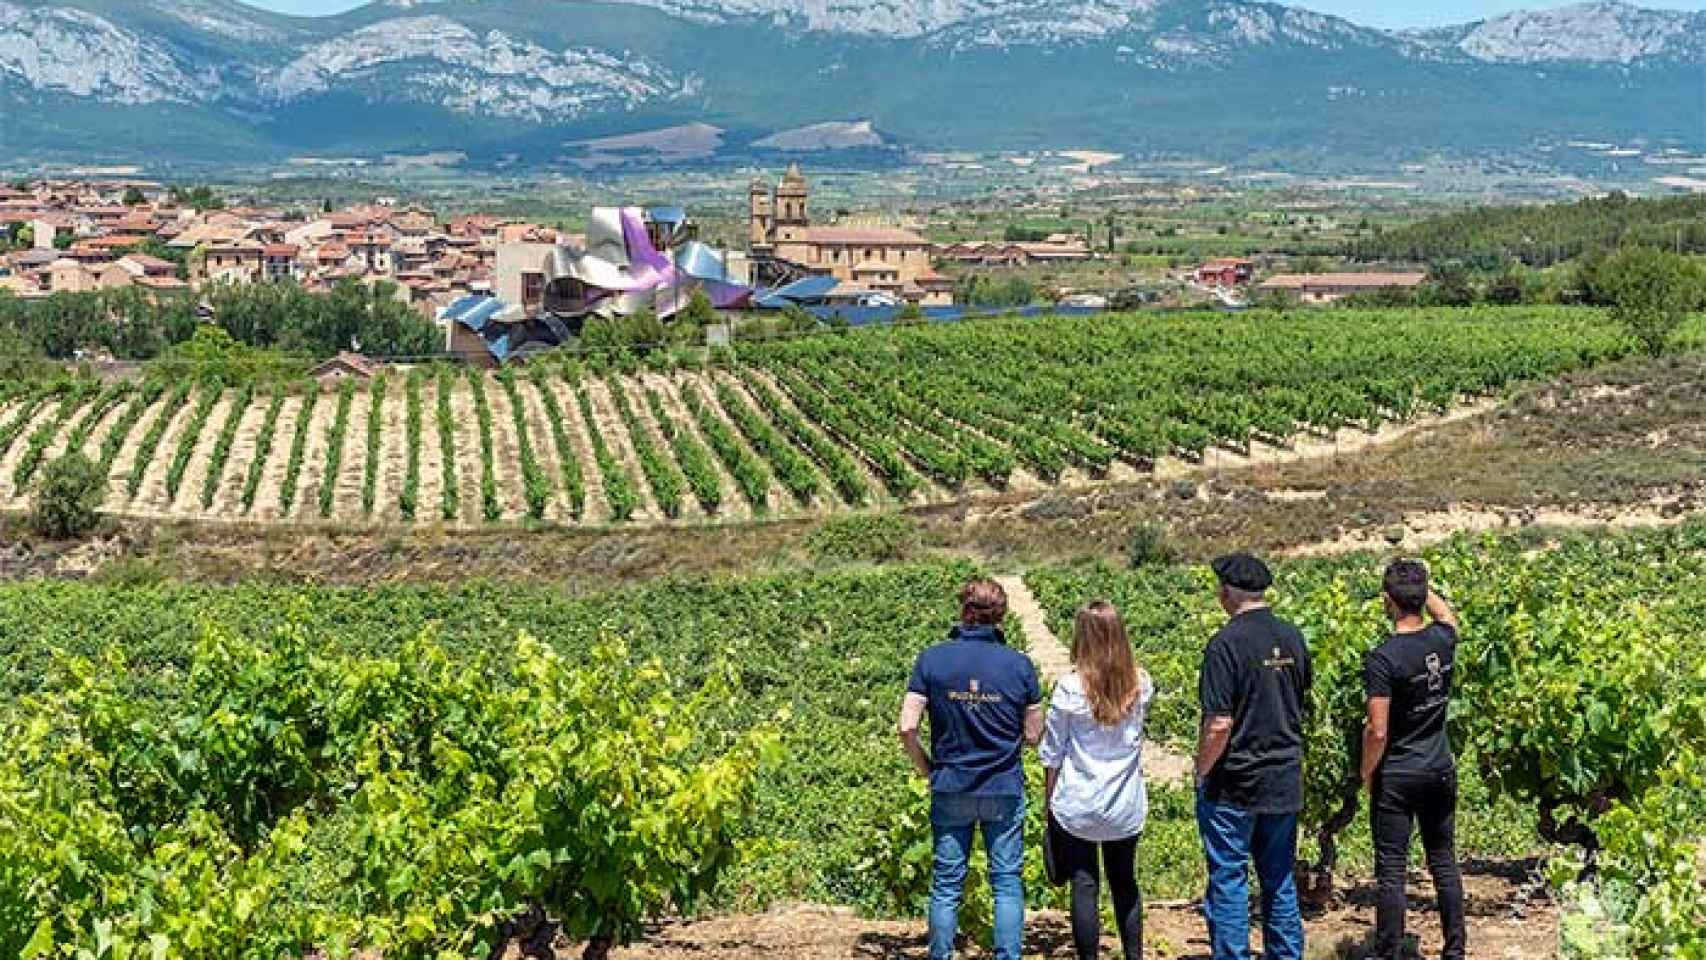 Enoturismo en Rioja Alavesa. / Bodegas Valdelana